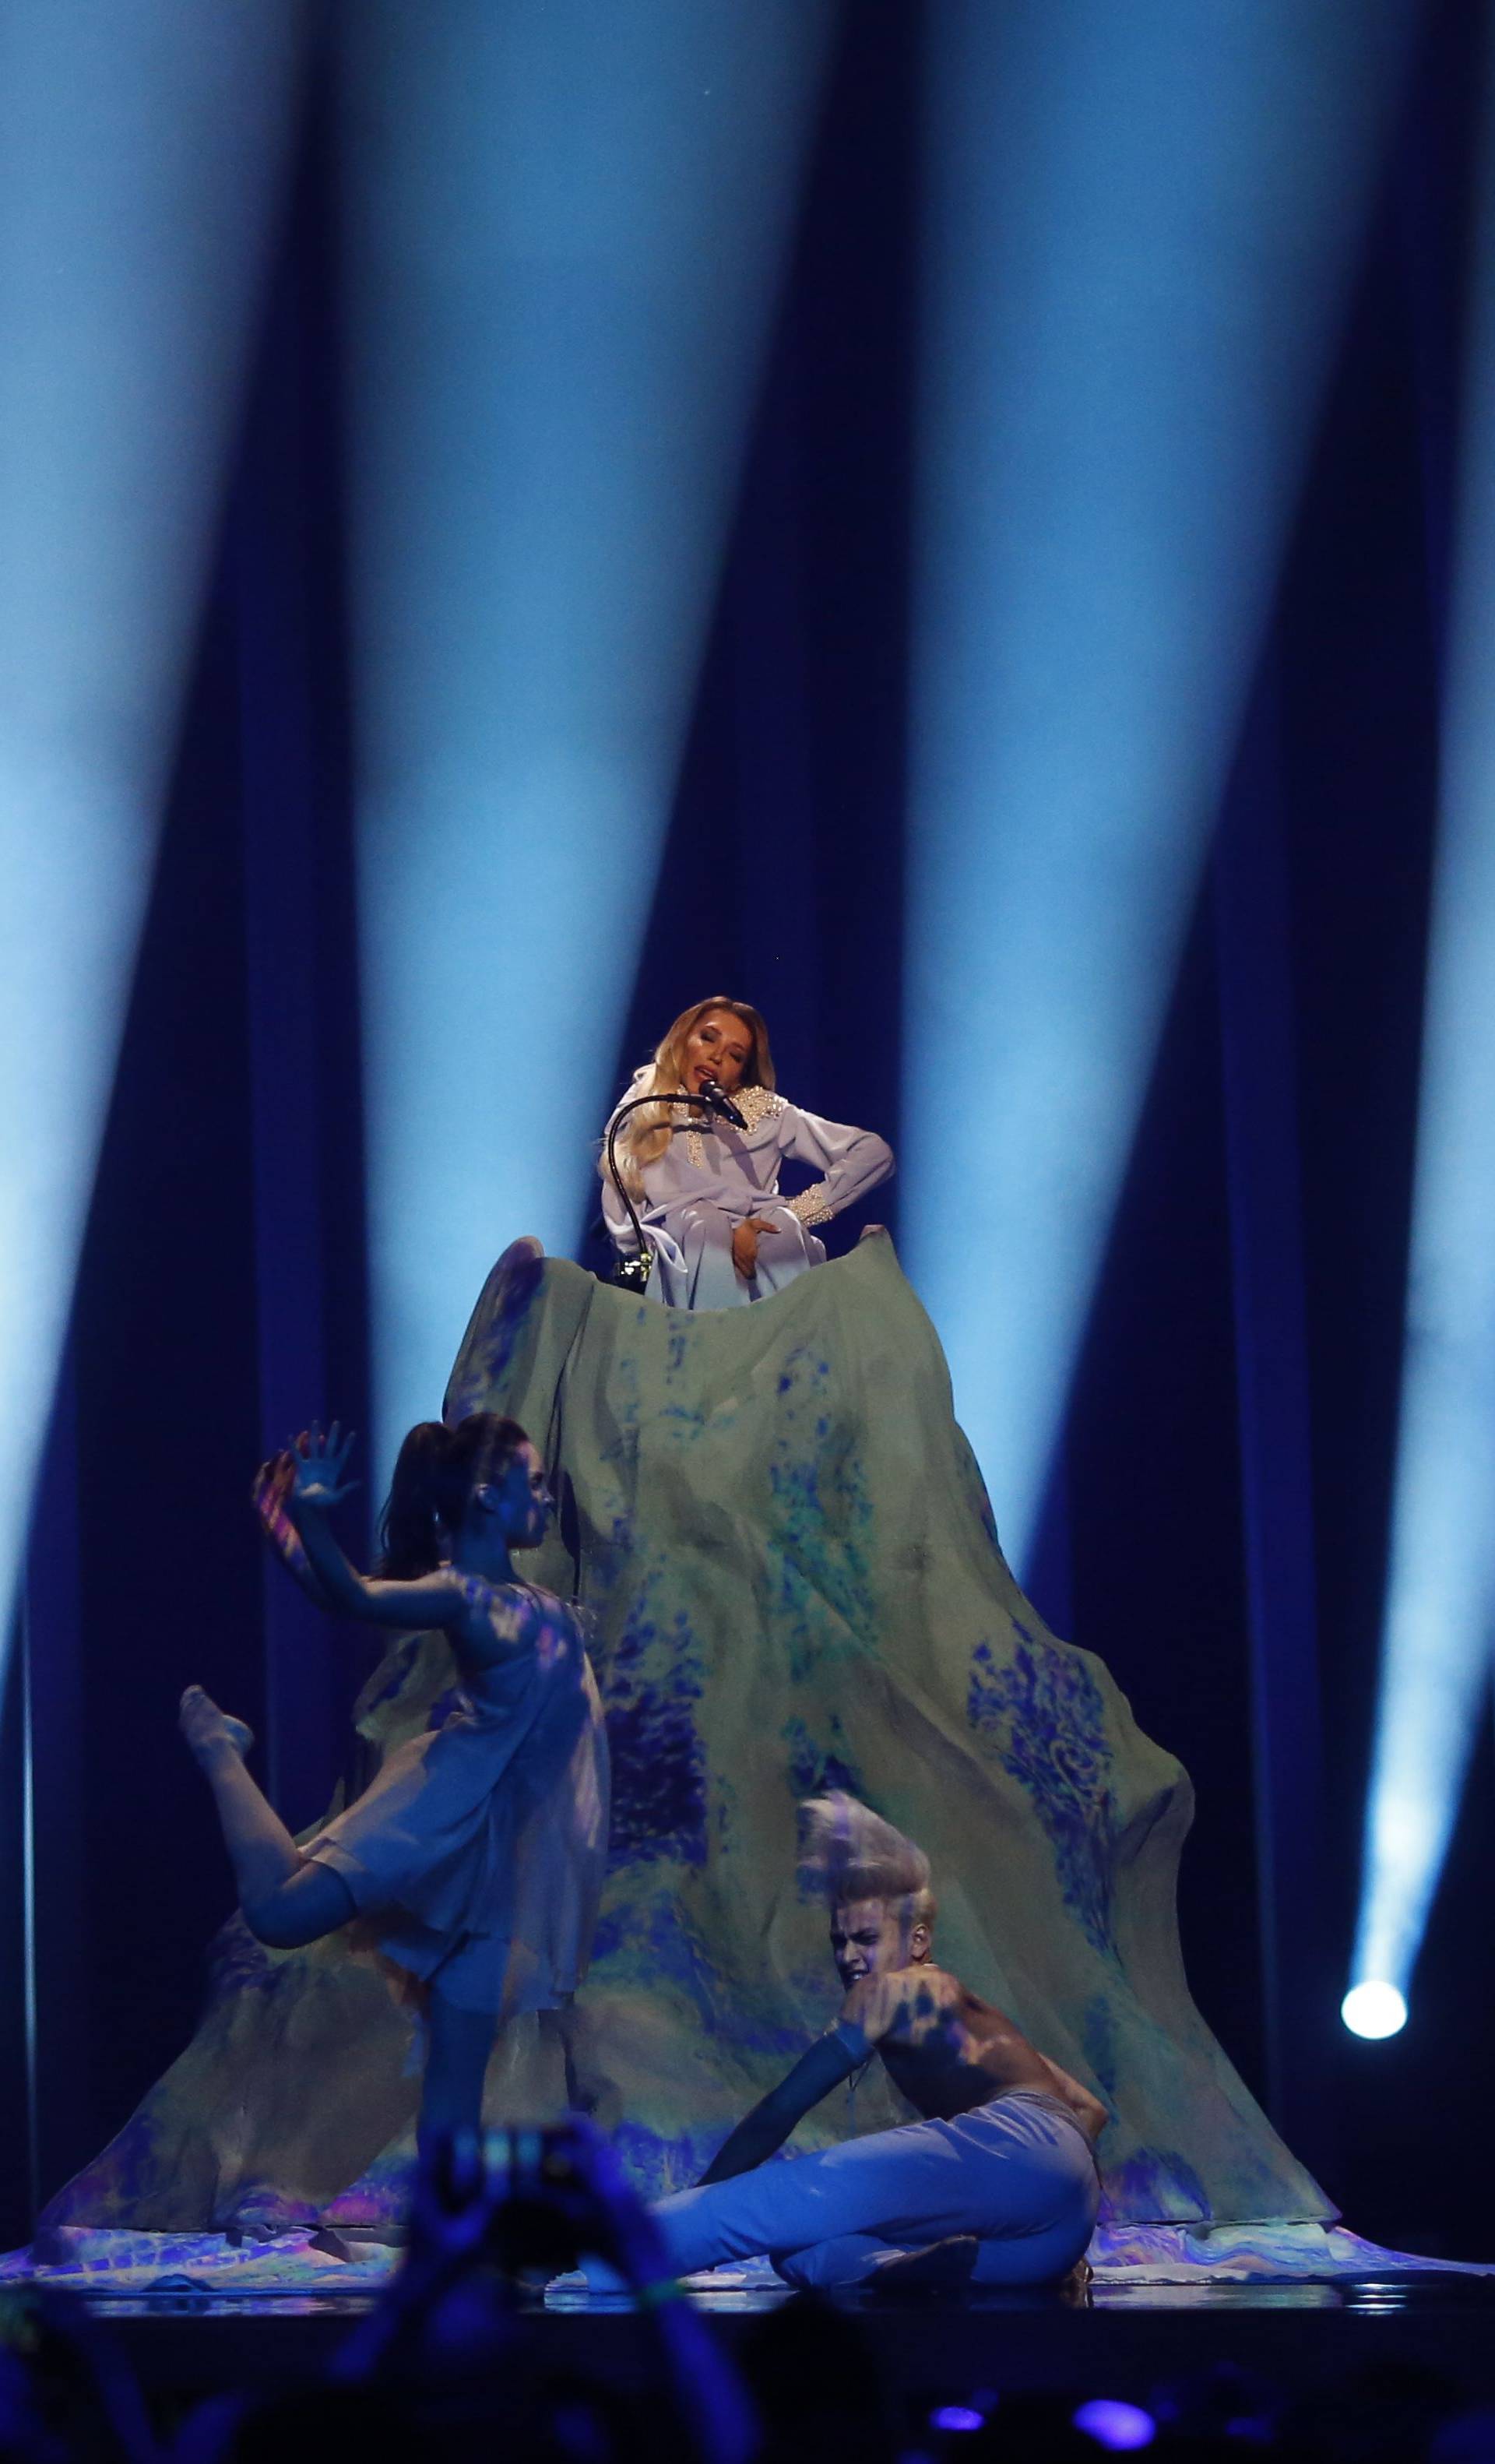 Russiaâs Julia Samoylova performs âI Won't Breakâ during the Semi-Final 2 for Eurovision Song Contest 2018 in Lisbon